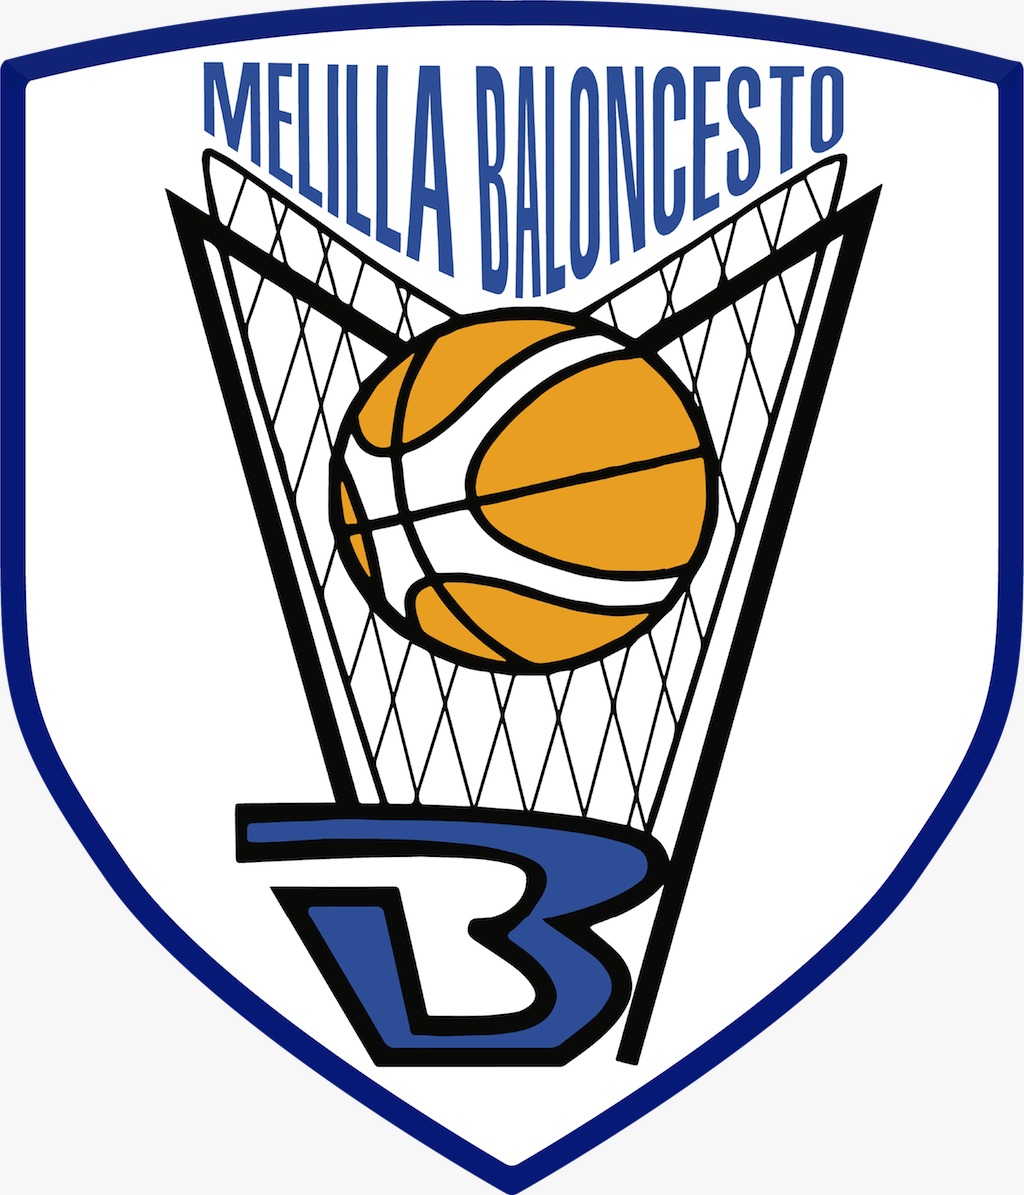 Melilla Sport Capital Club Melilla Baloncesto